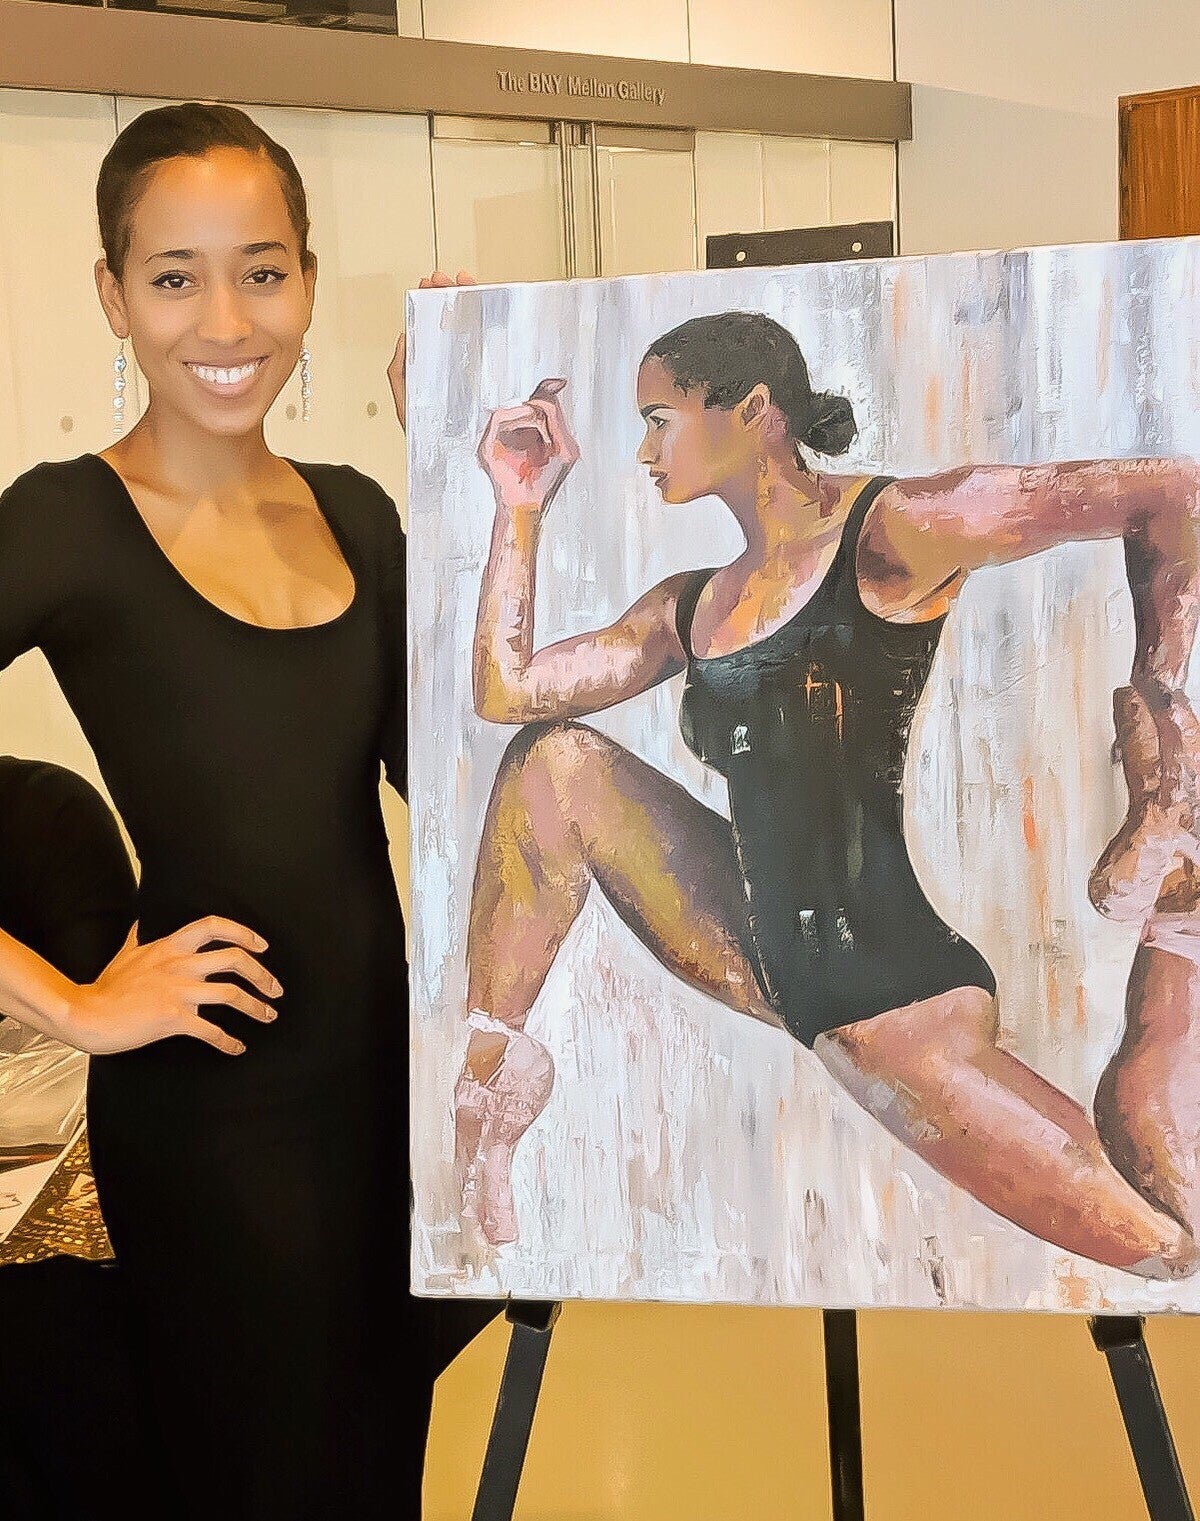 Morgan Overton with ballerina painting